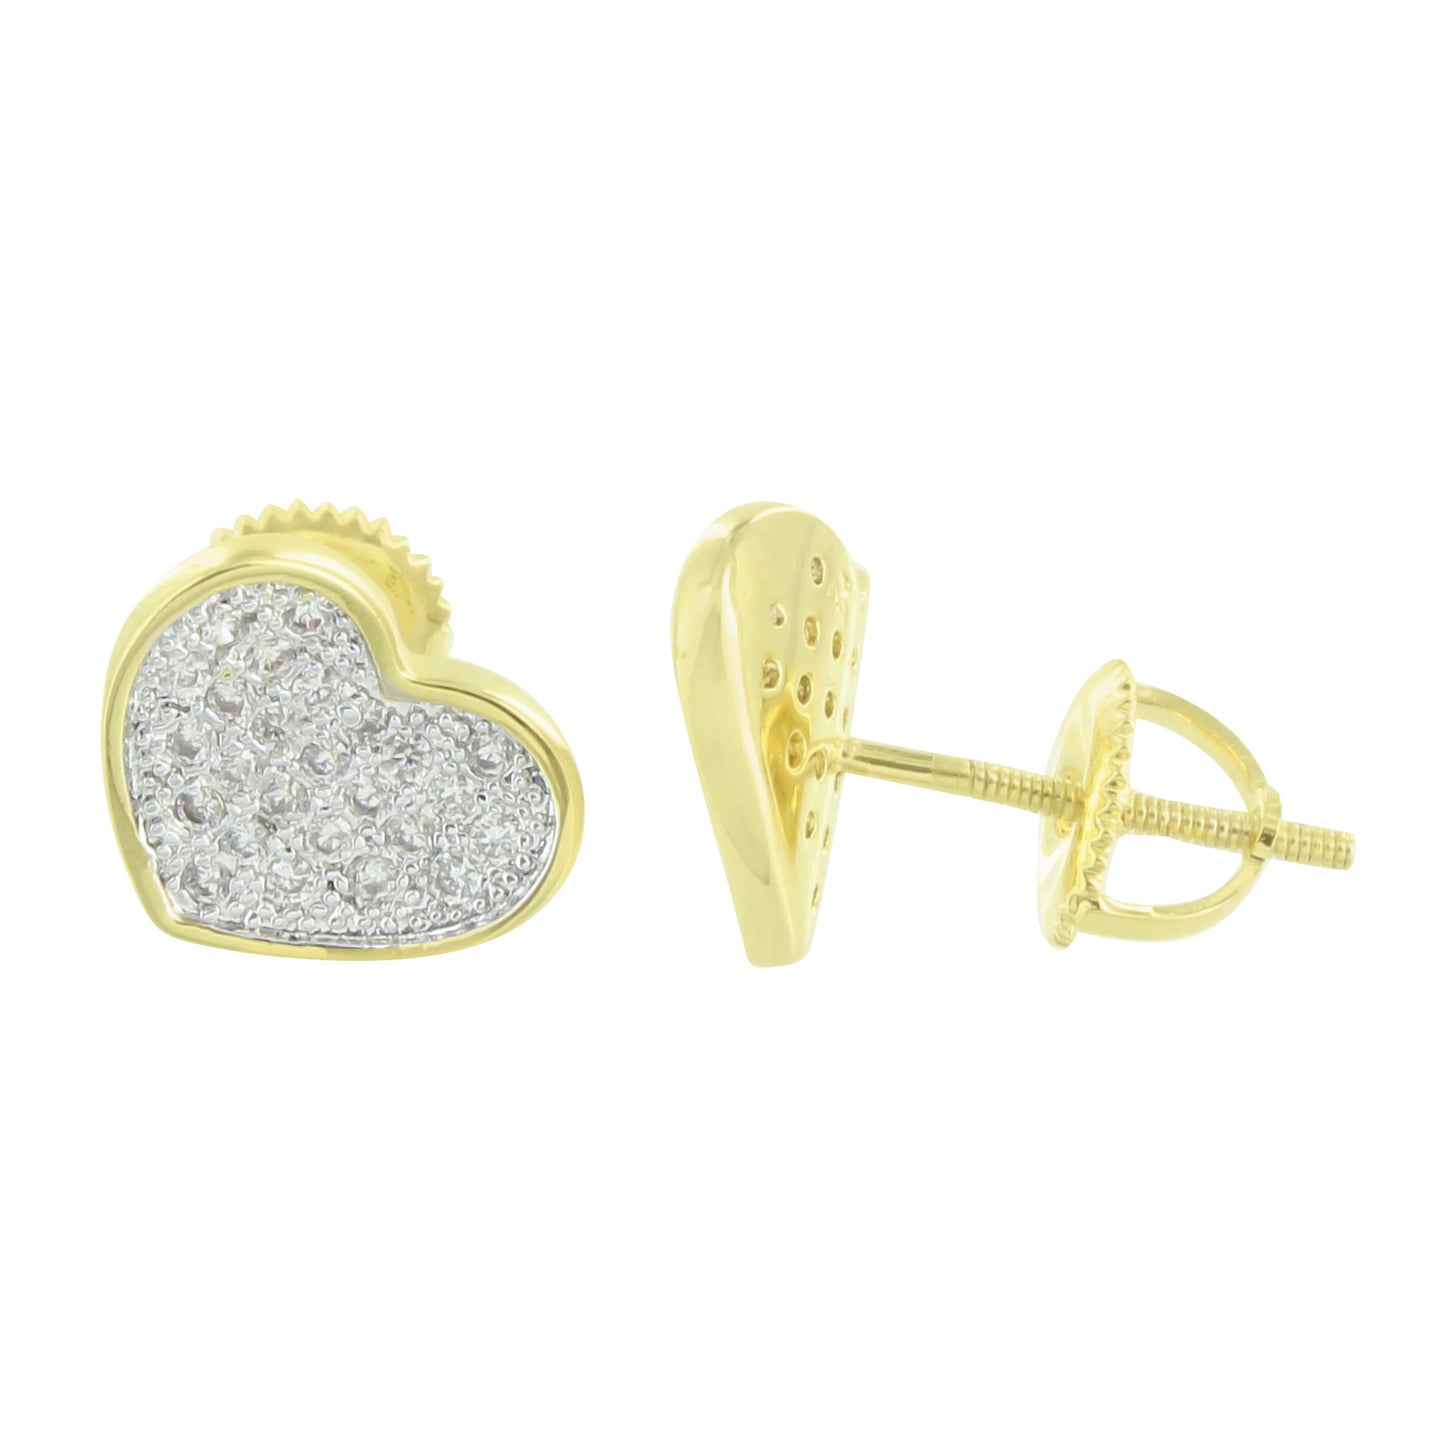 Heart Earrings 14k Gold Finish Screw Back Lab Diamonds